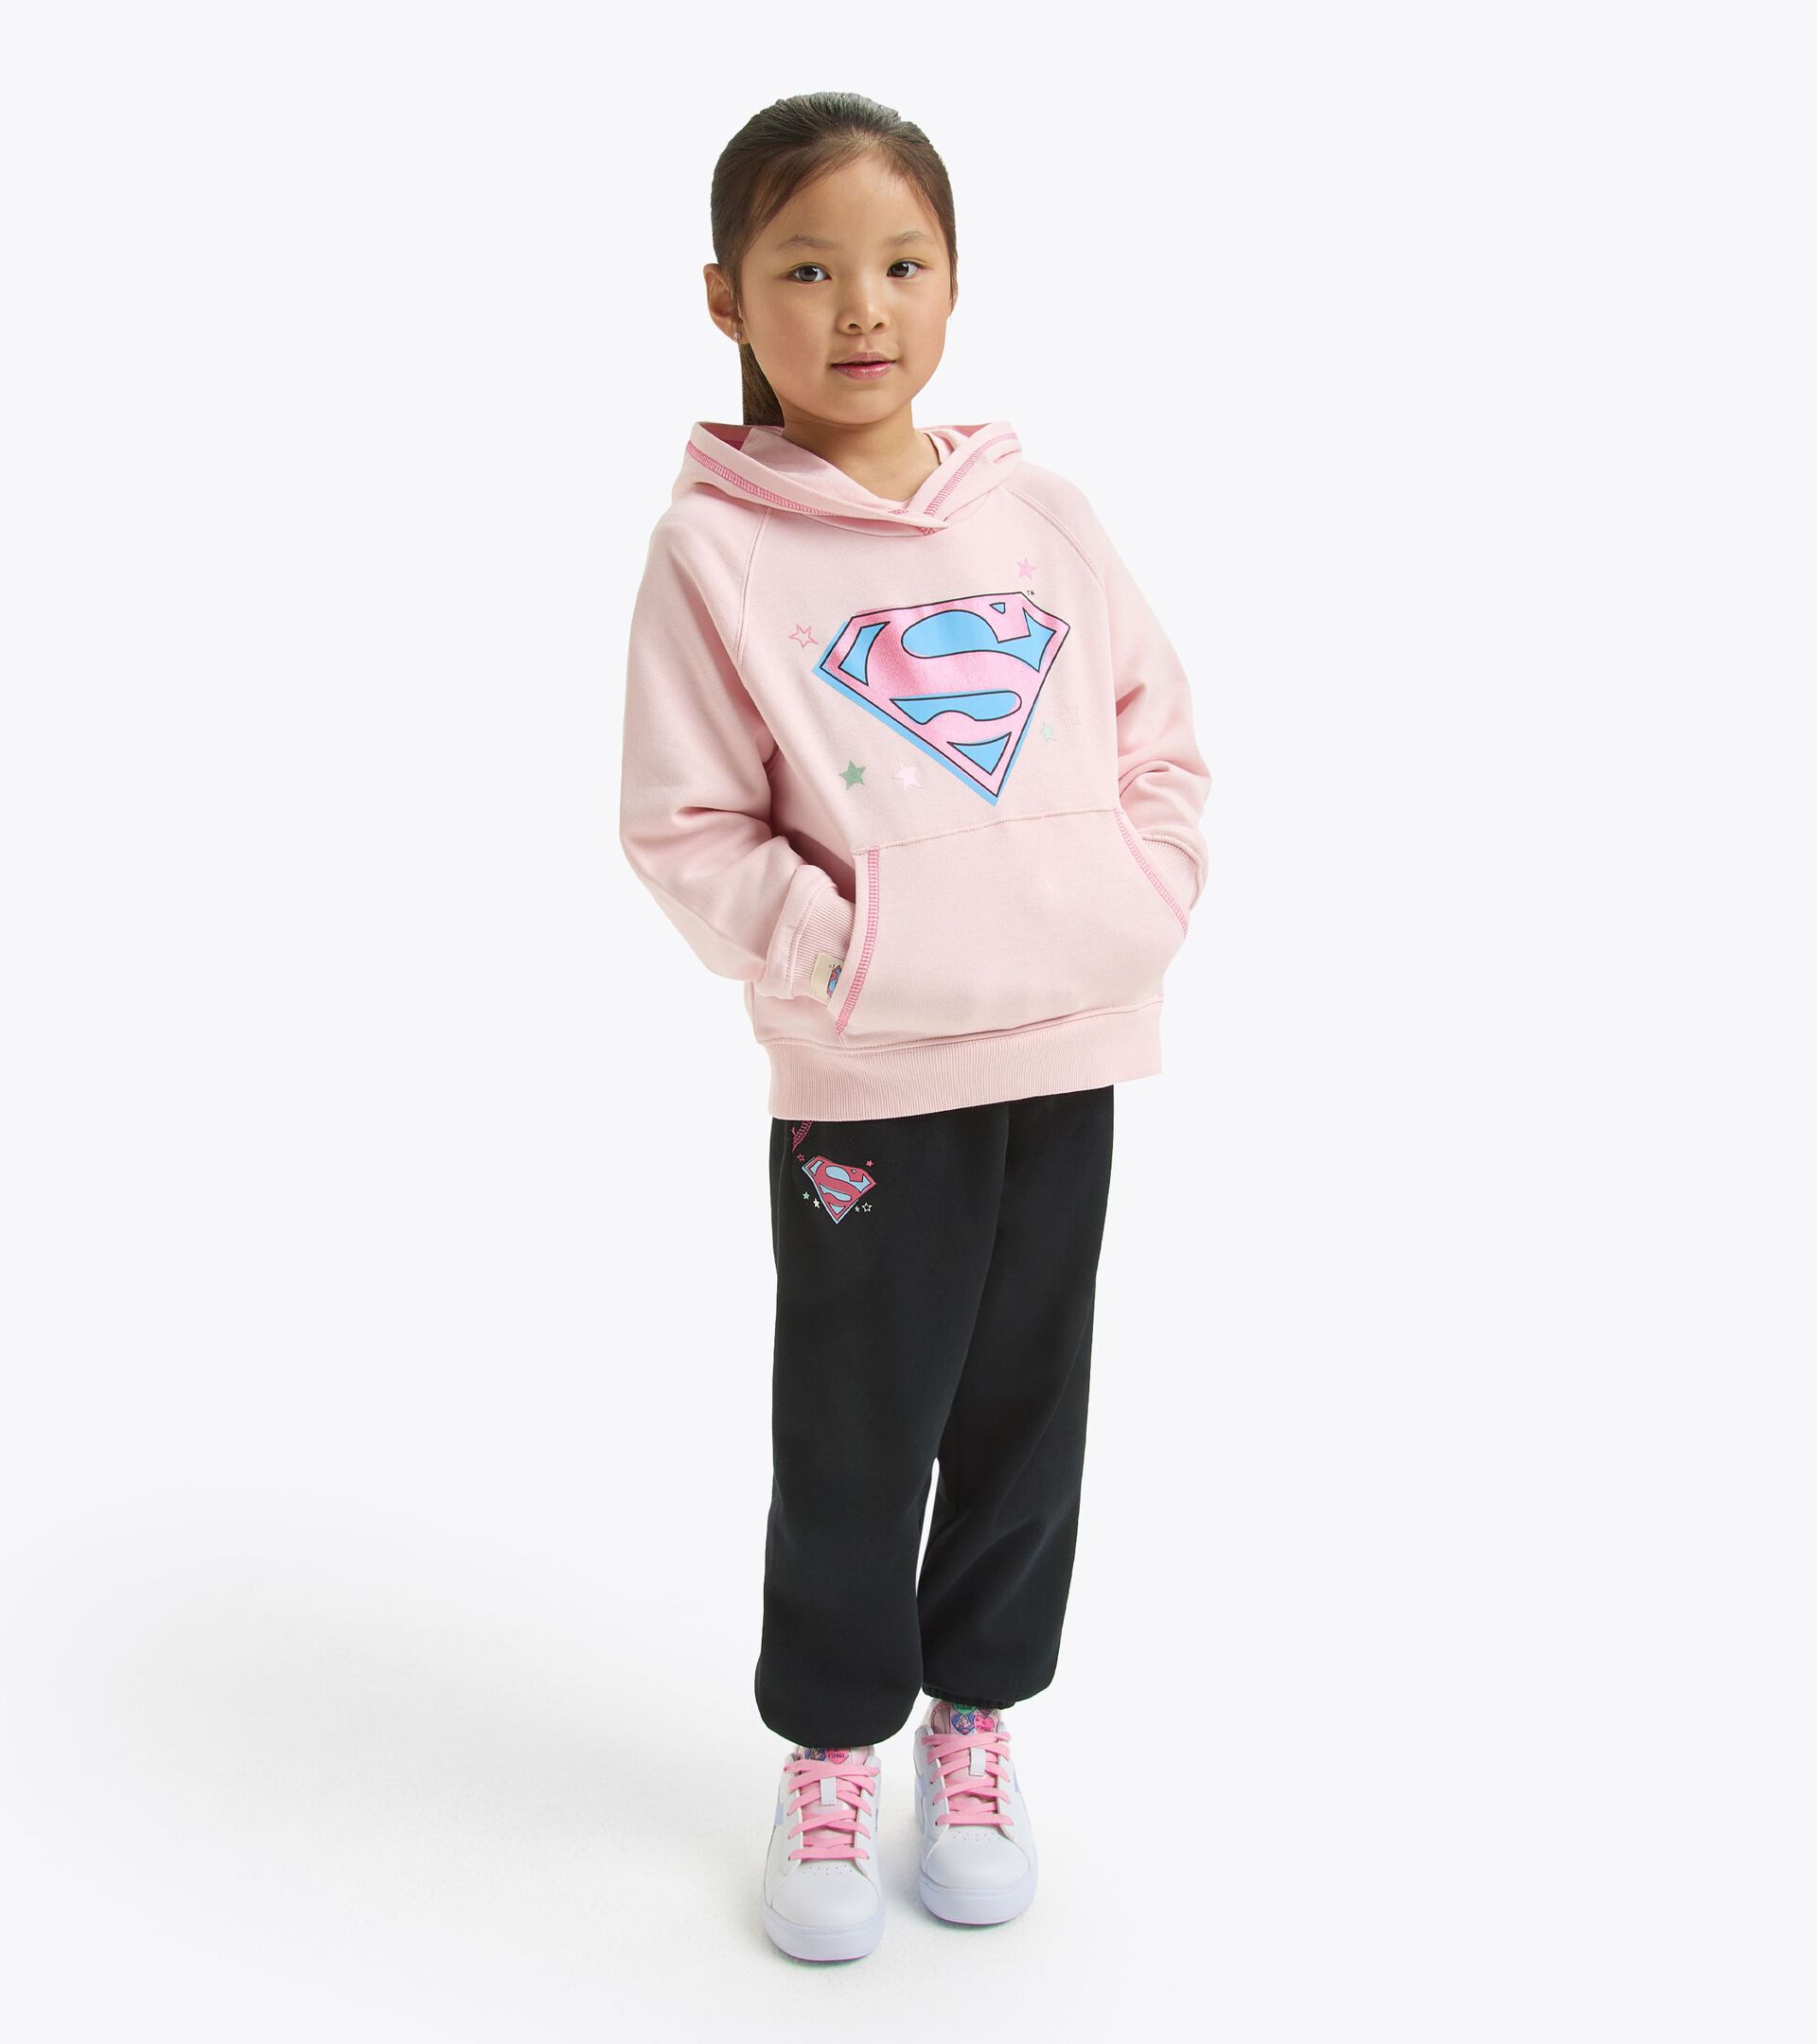 Sweat-shirt à capuche super-héros - Garçon et fille  JU.HOODIE SUPERHEROES ROSE CORNOUILLER - Diadora